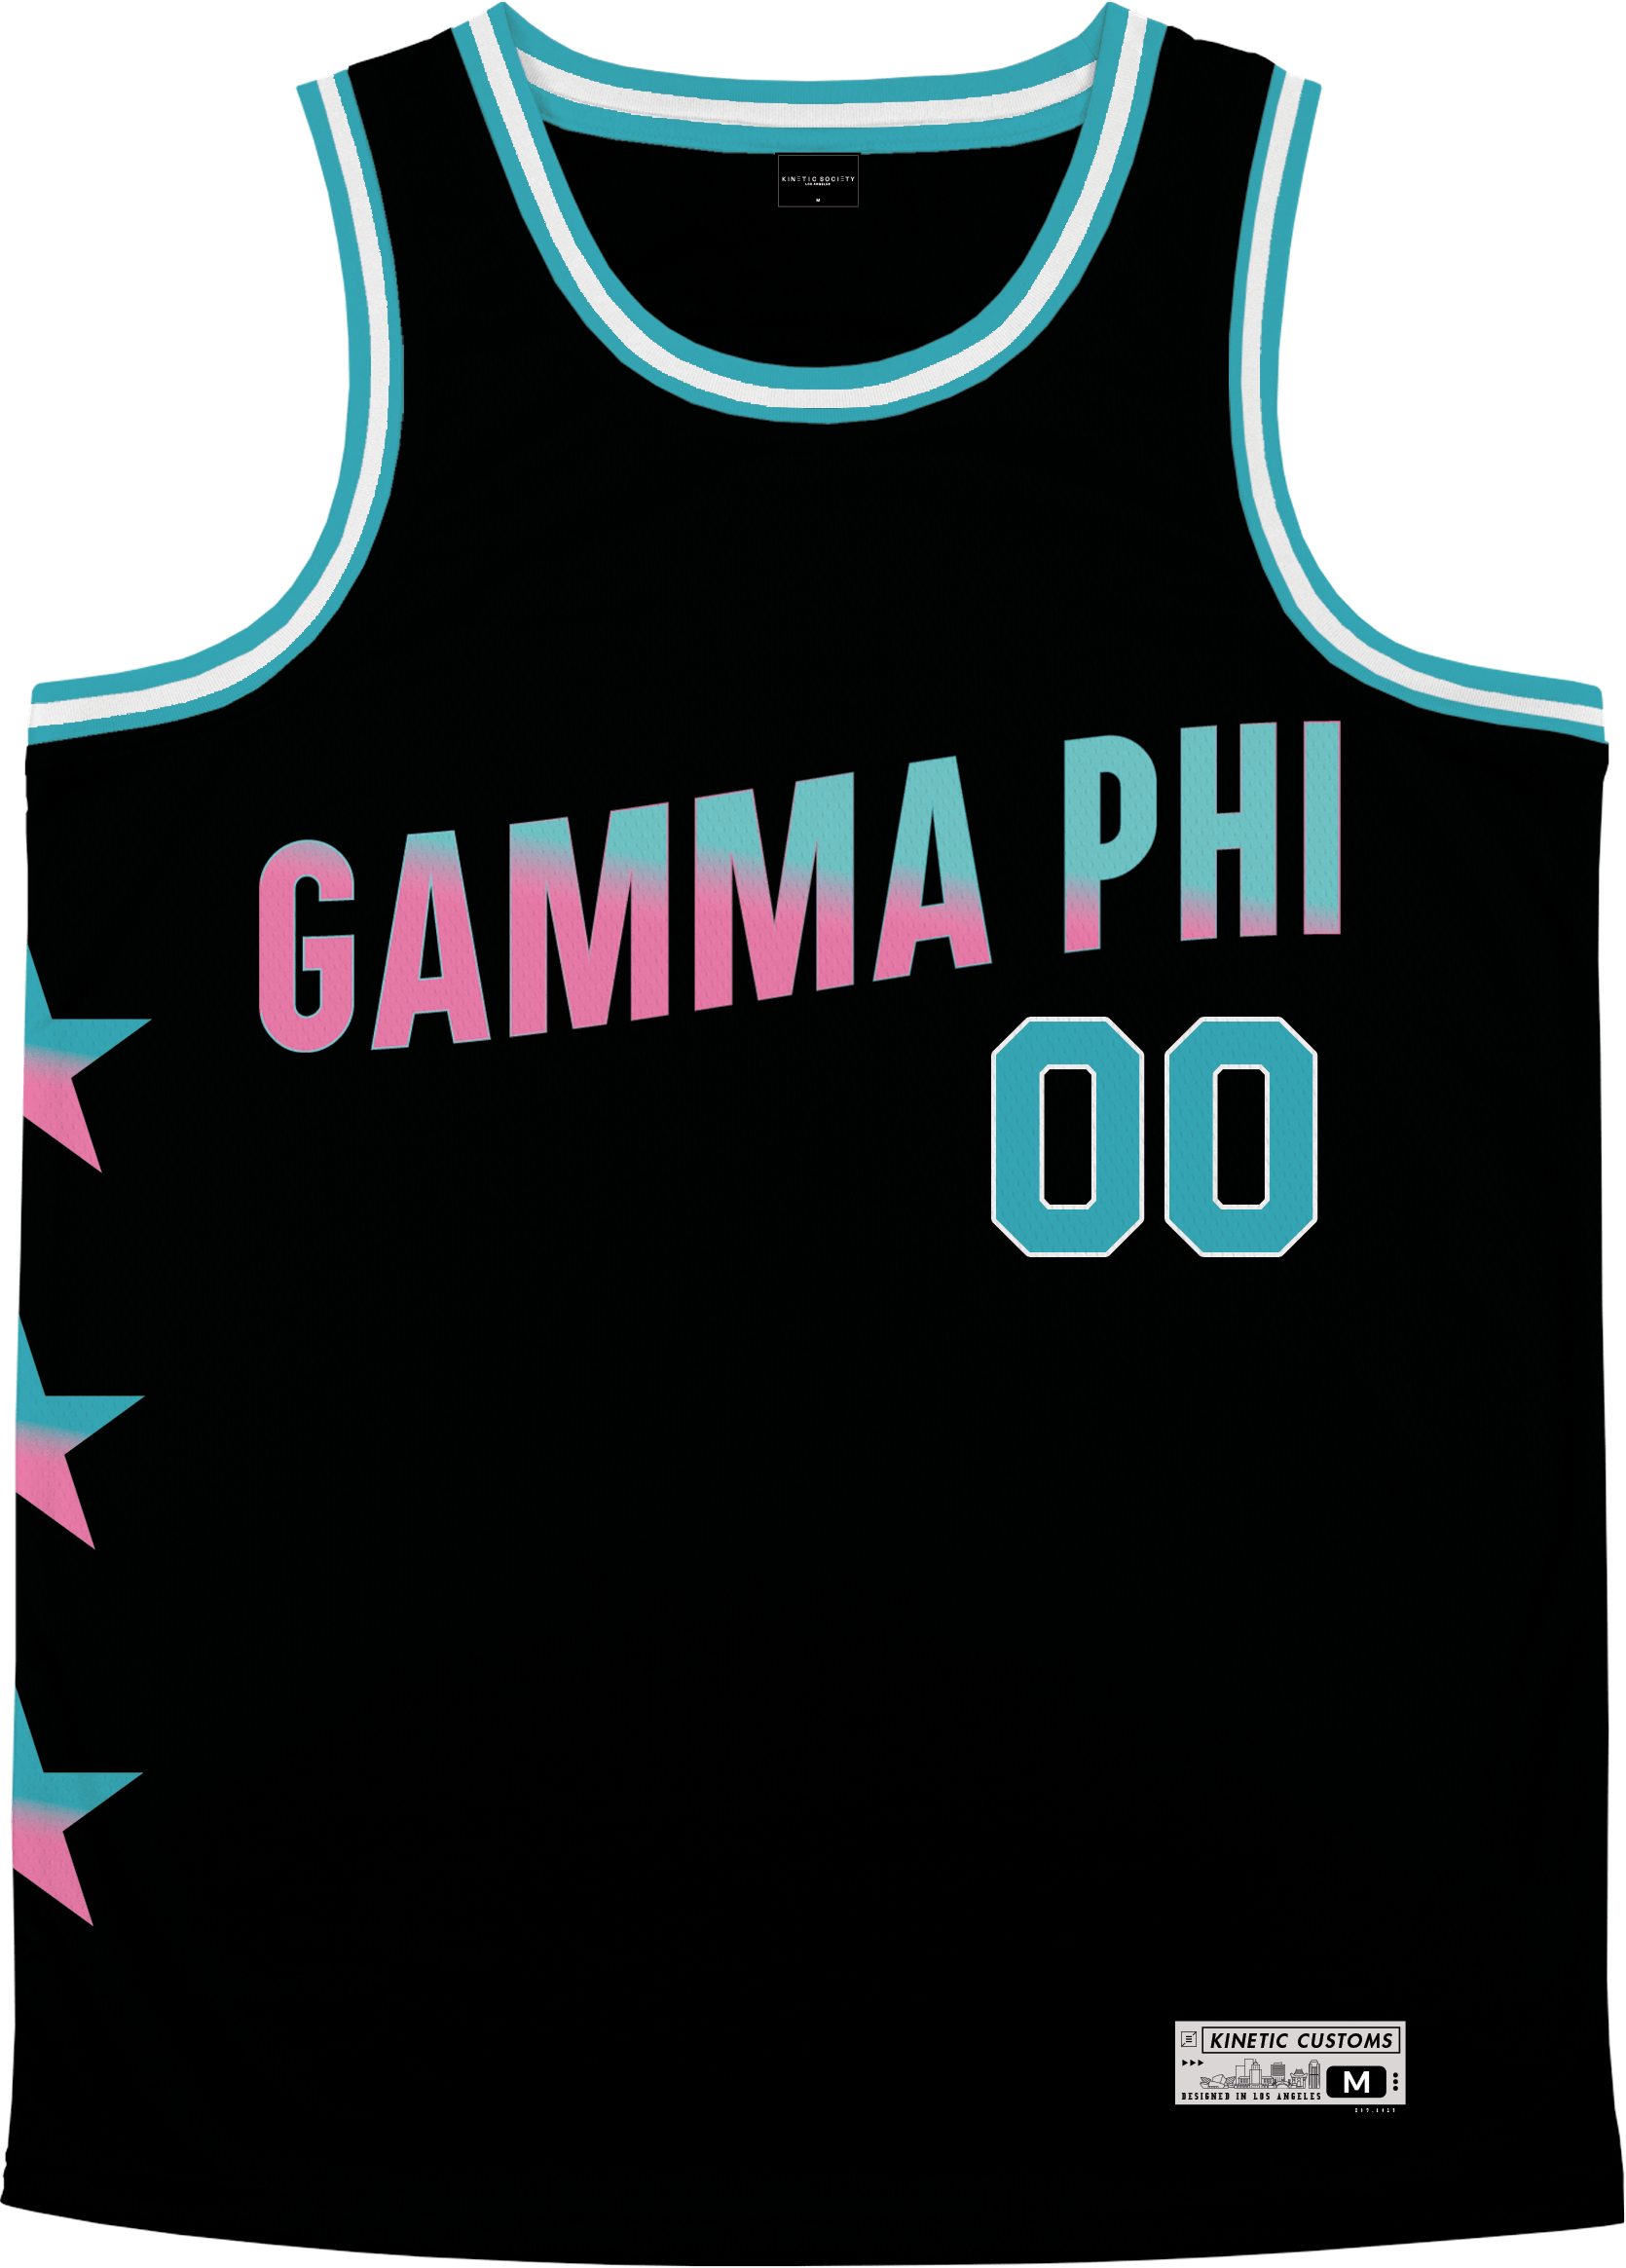 Gamma Phi Beta - Cotton Candy Basketball Jersey Premium Basketball Kinetic Society LLC 